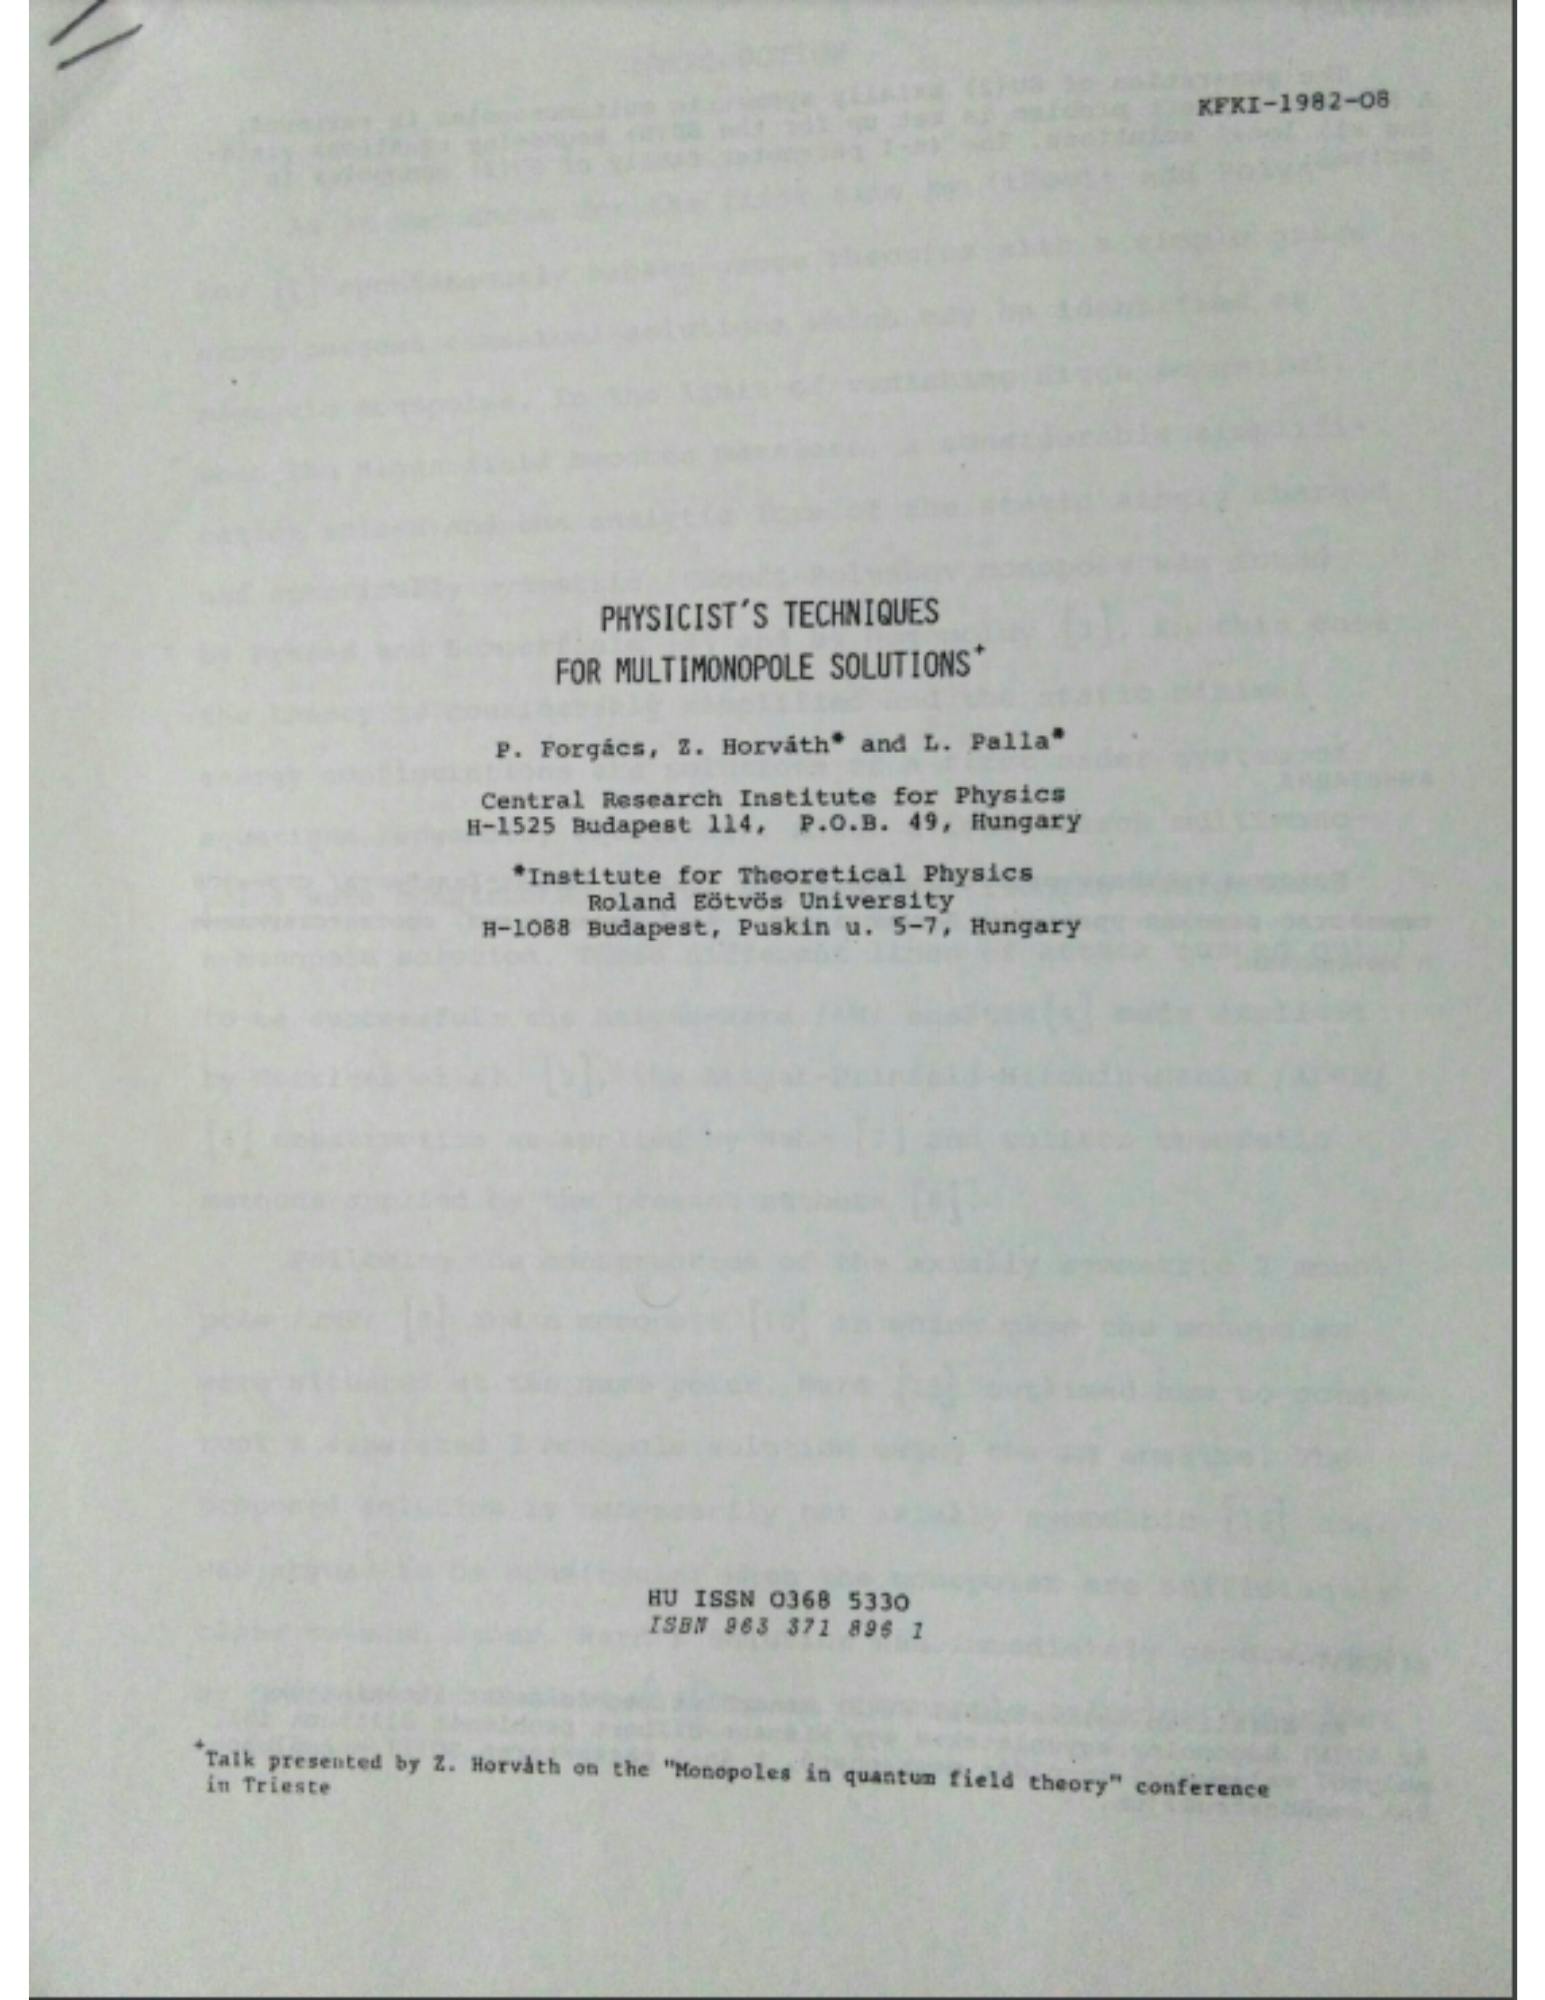 Preprints in printed form, circa 1982